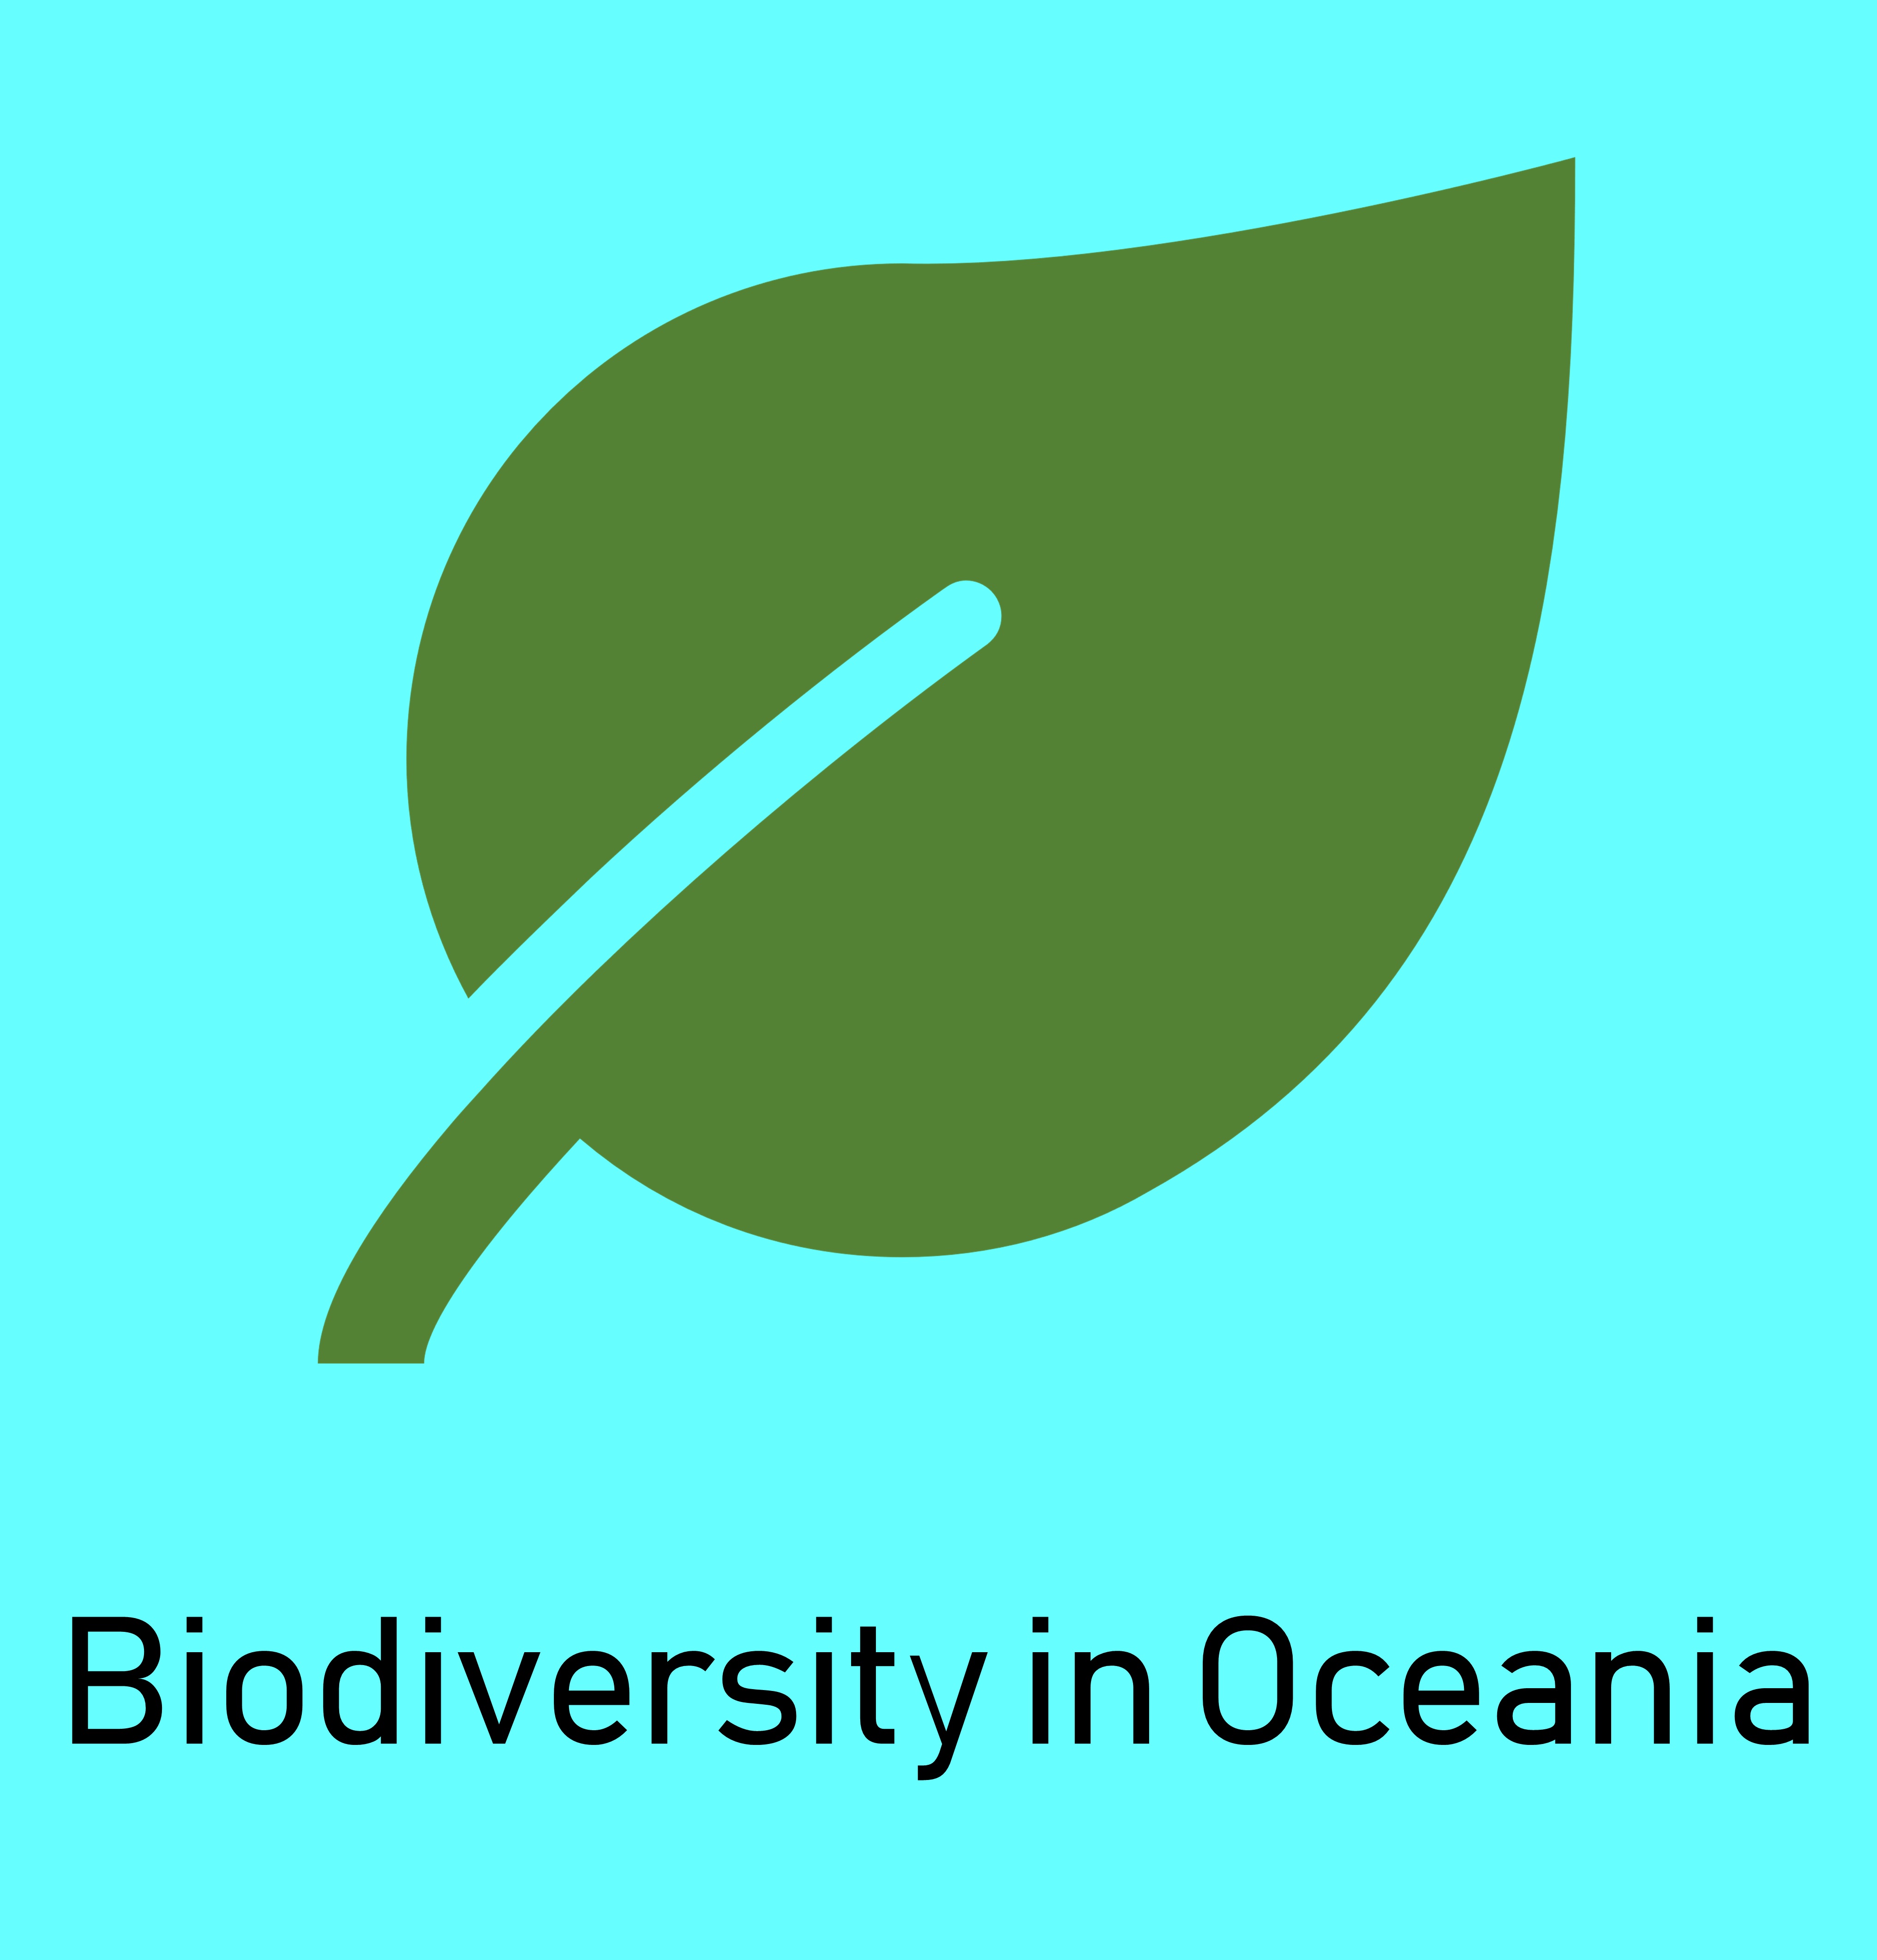 Biodiversity in Oceania